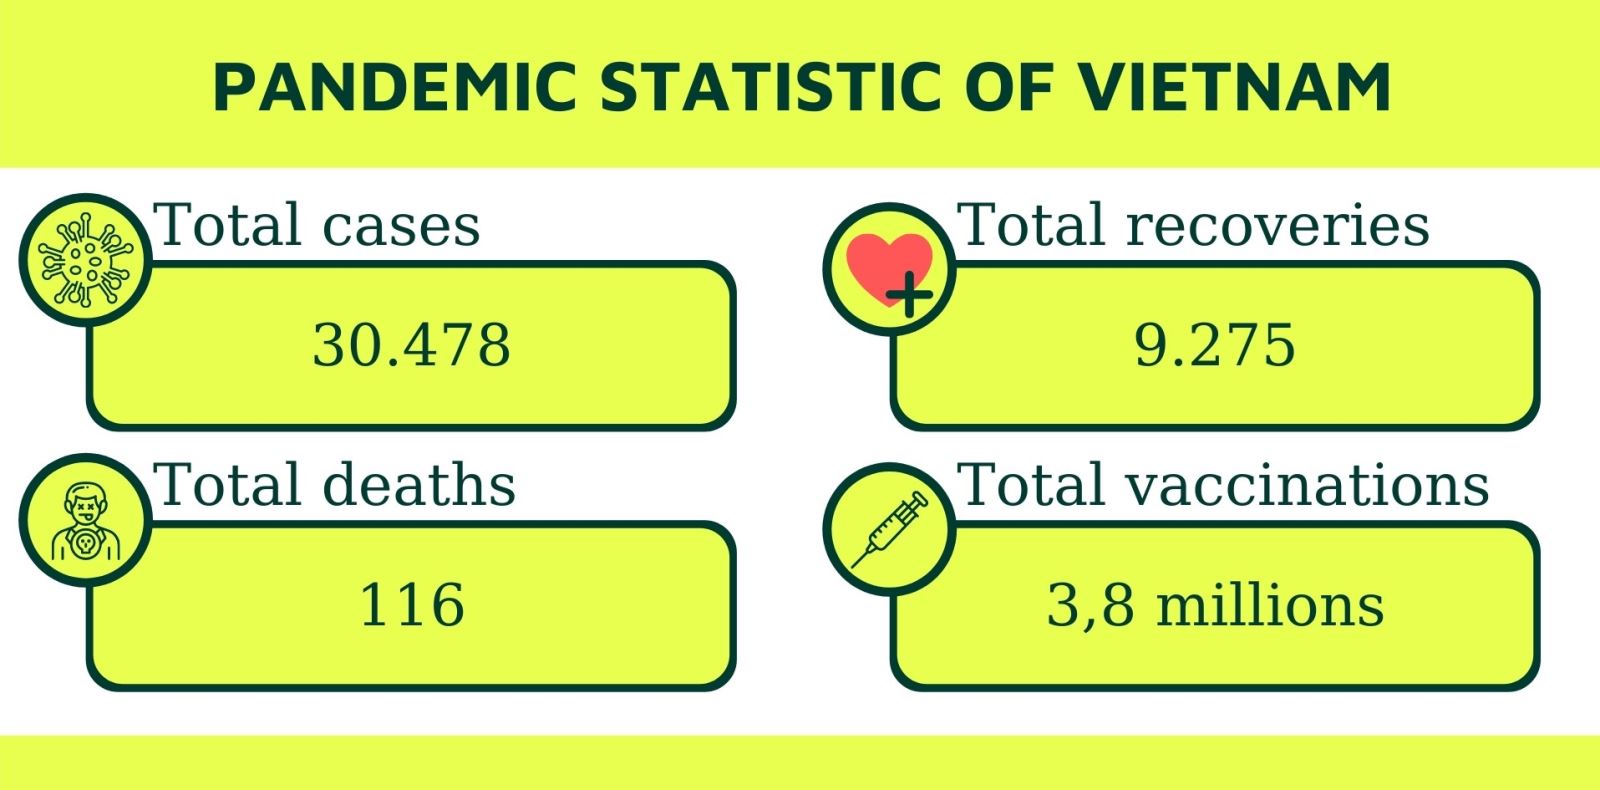 Summerize of Vietnam's pandemic statistics